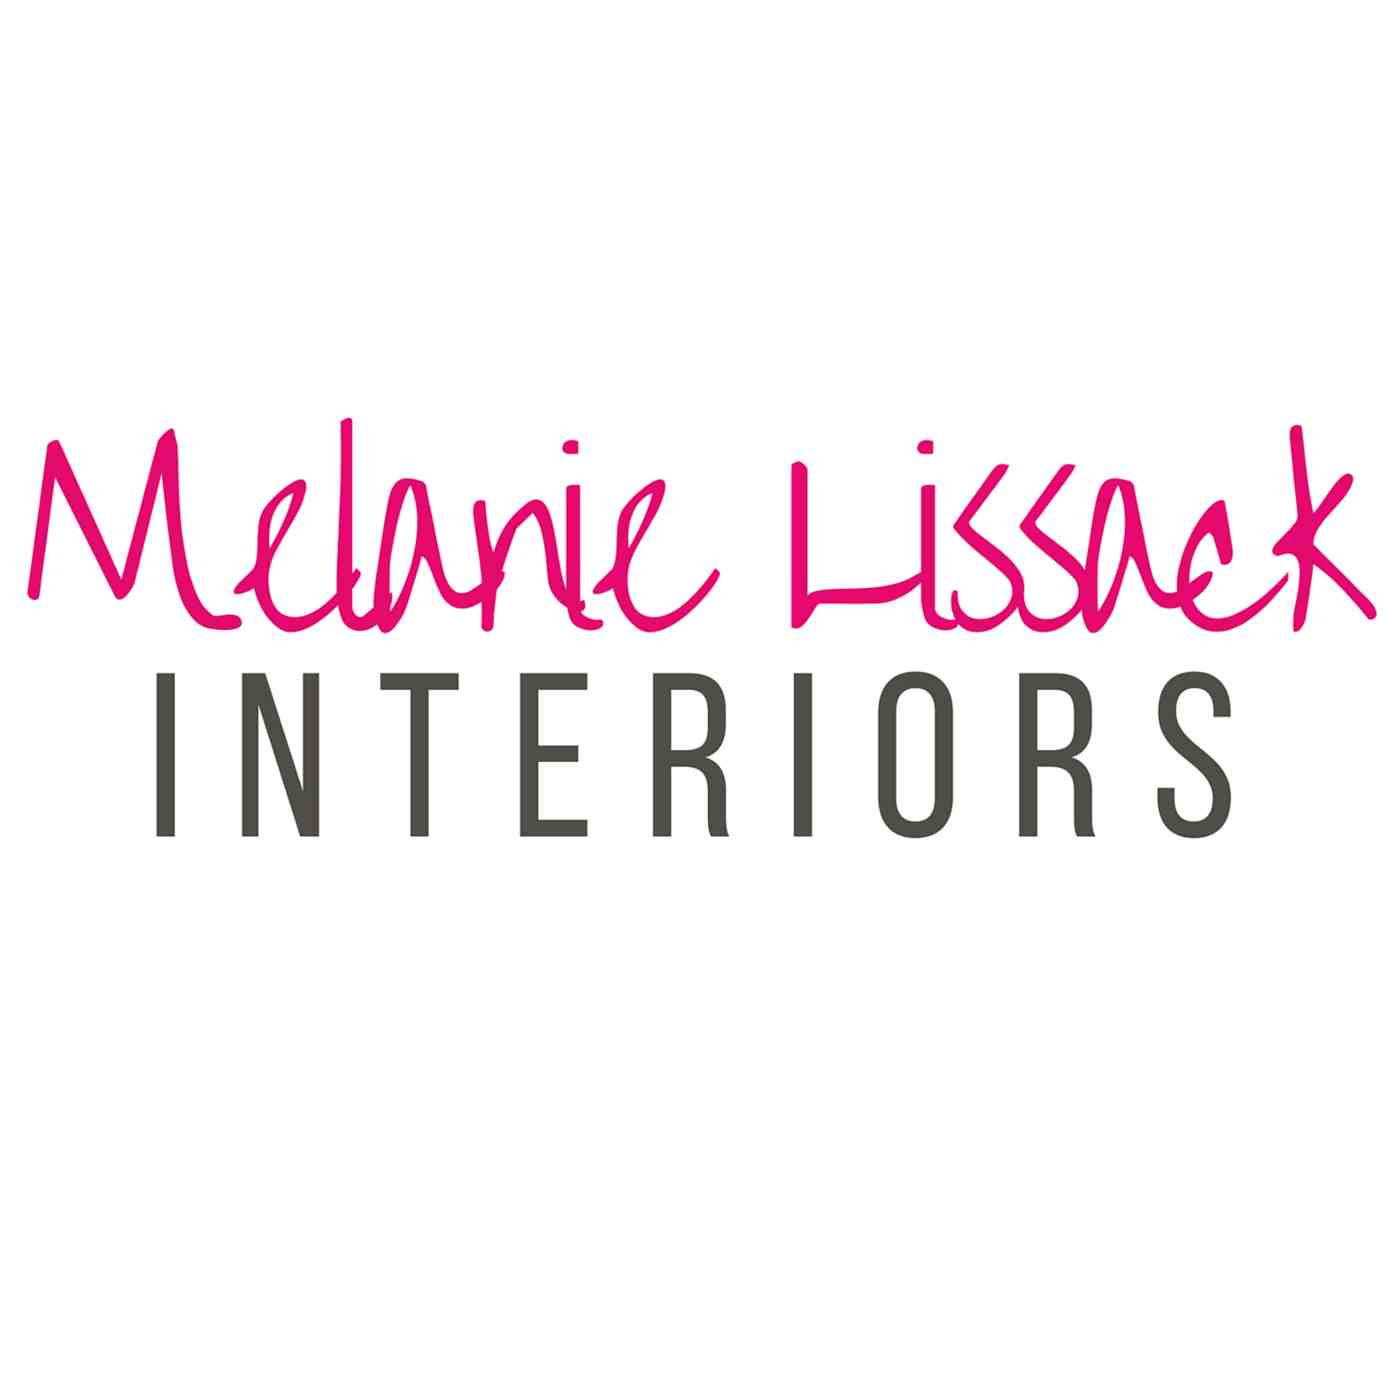 Emily In Paris' Set Design & Interiors - Discover How To Get The Look! —  MELANIE LISSACK INTERIORS